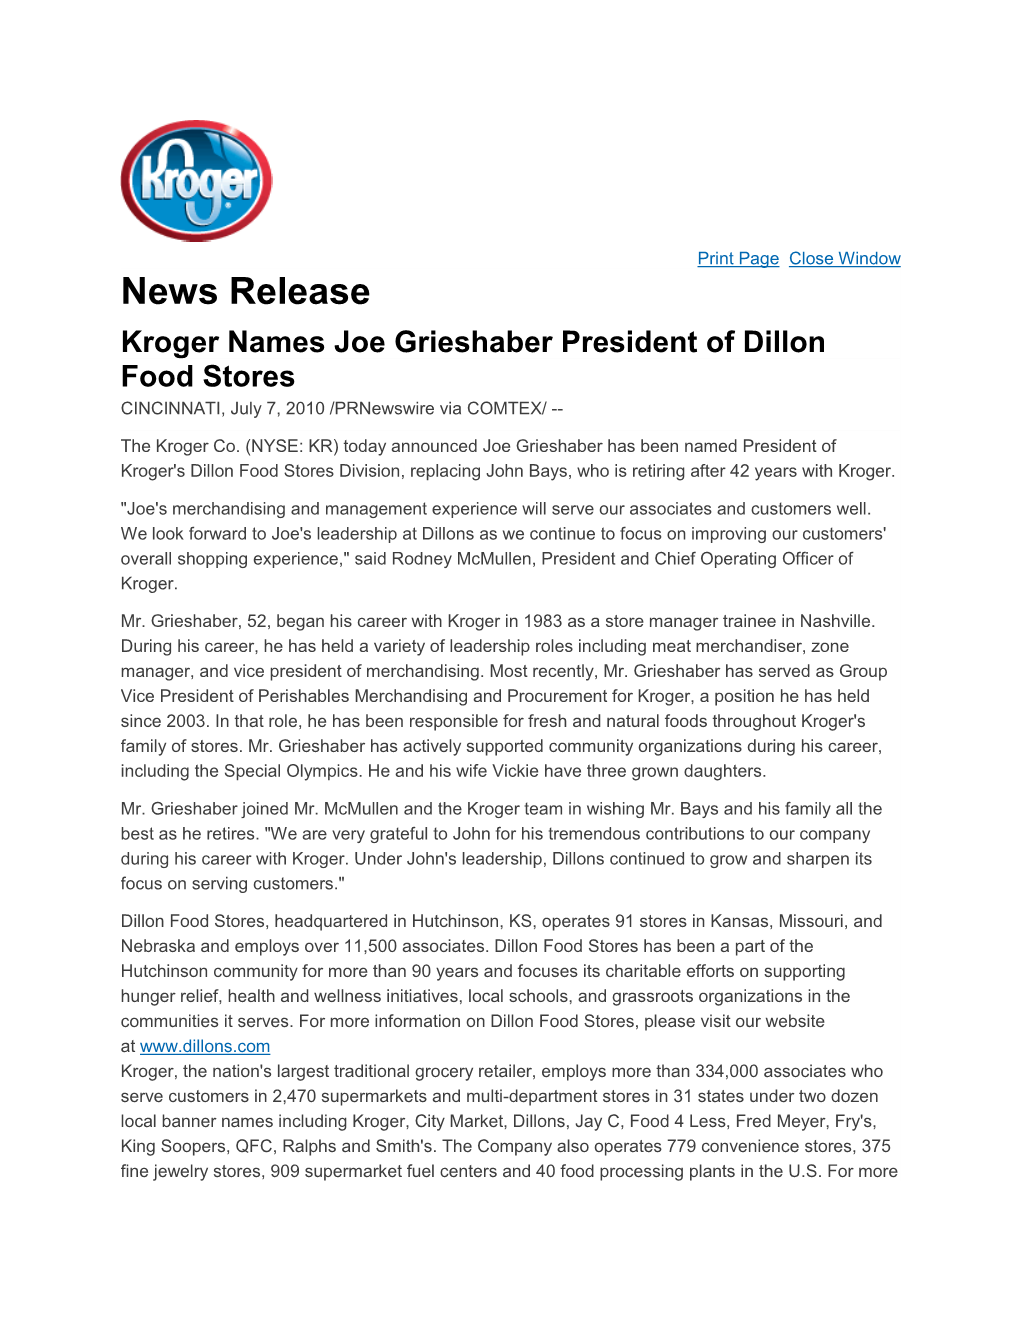 News Release Kroger Names Joe Grieshaber President of Dillon Food Stores CINCINNATI, July 7, 2010 /Prnewswire Via COMTEX/